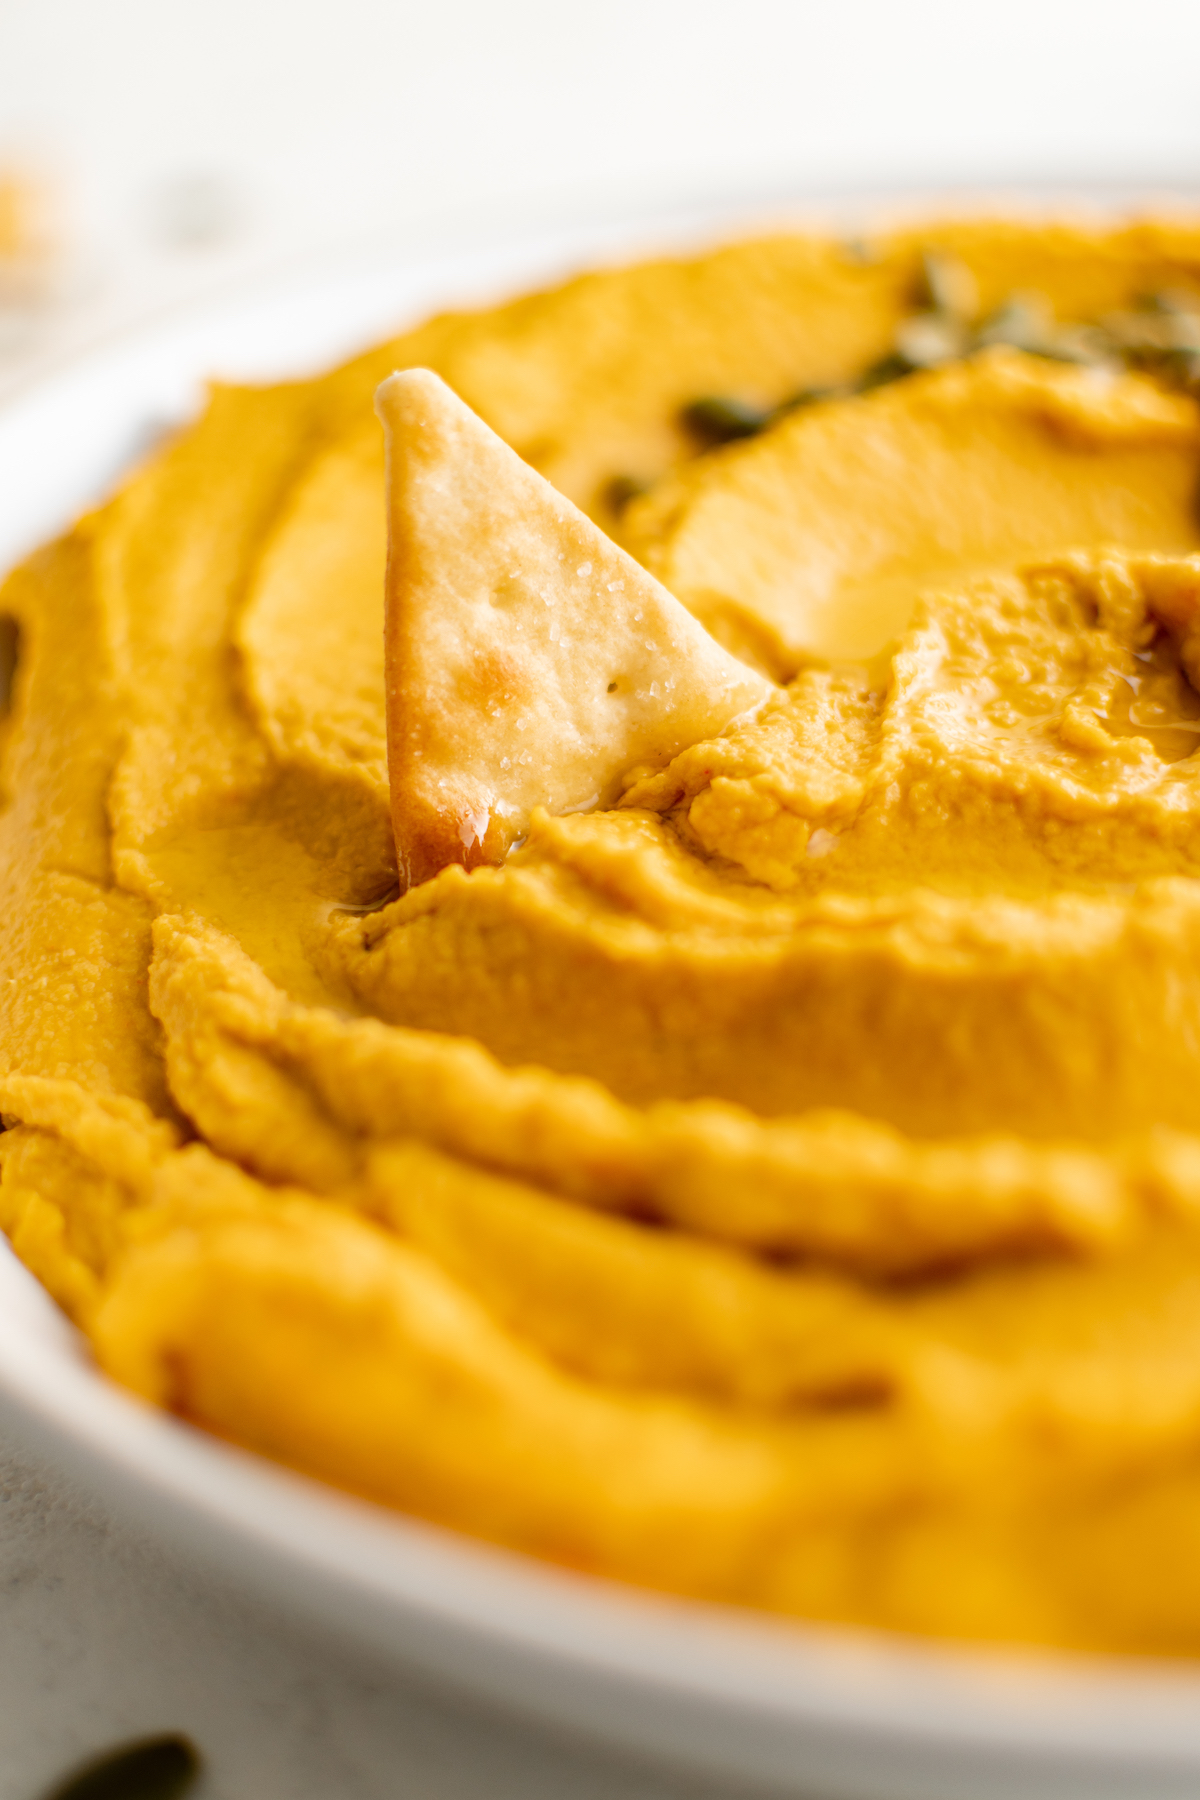 Close up of a bowl of orange pumpkin hummus with a pita chip half submerged.